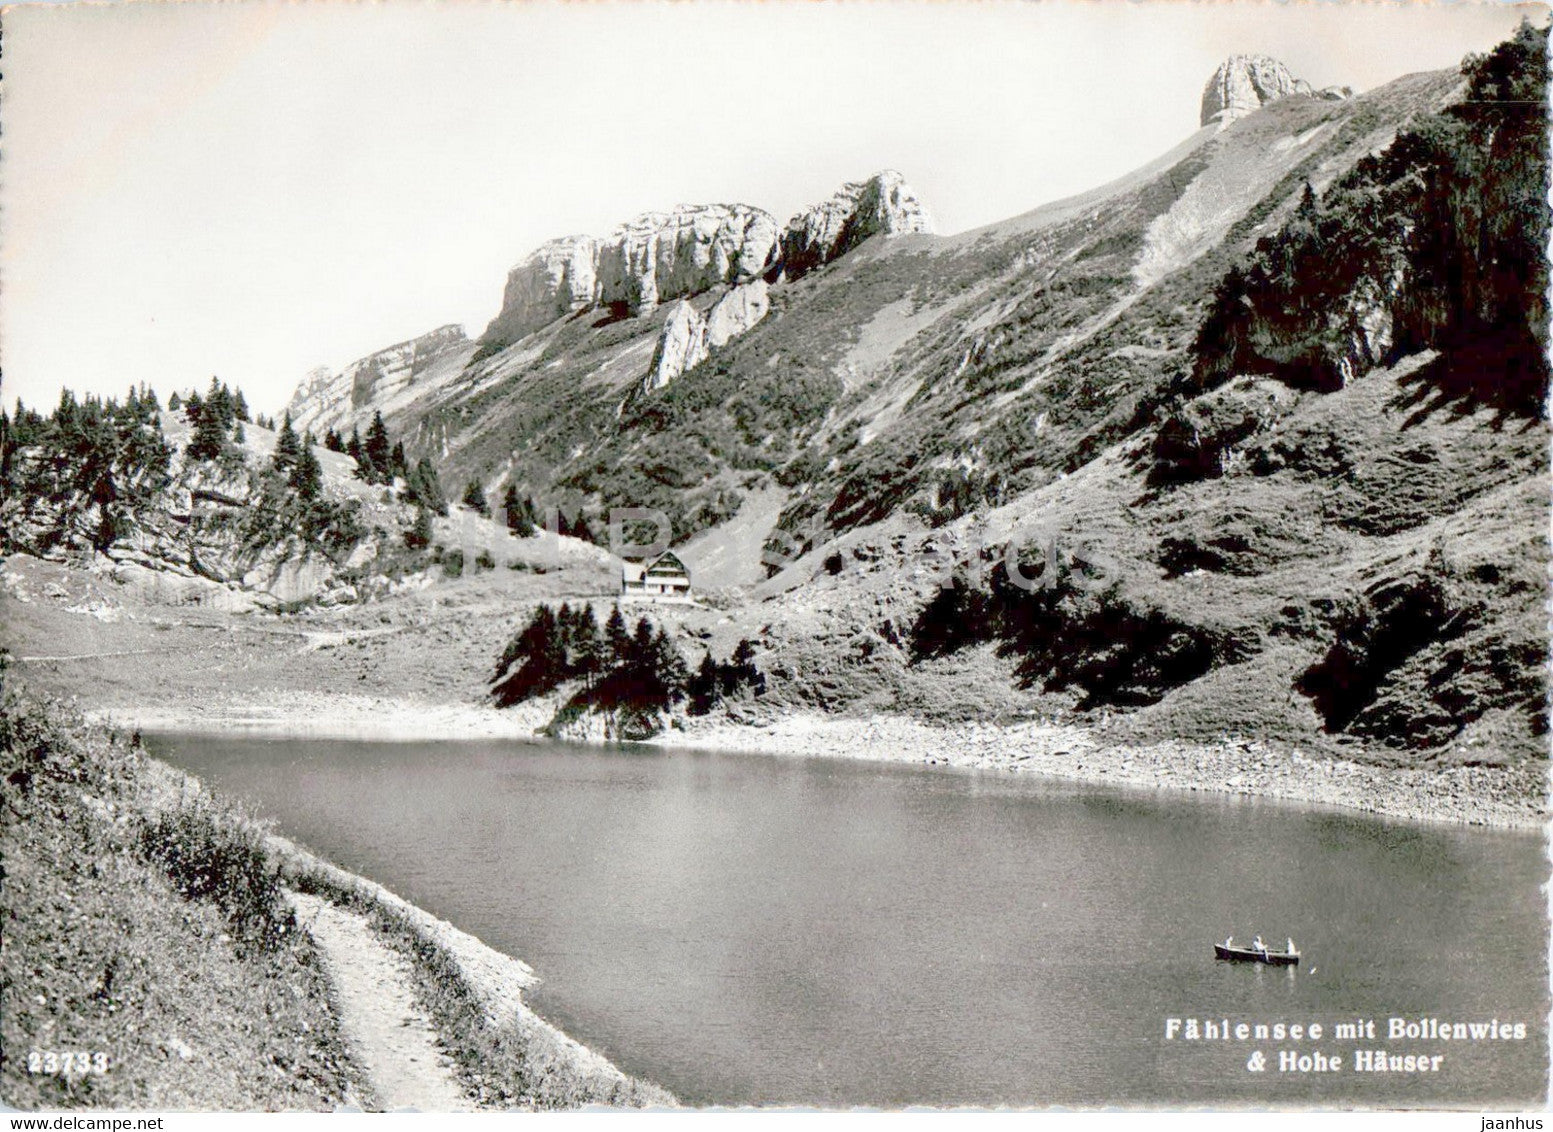 Fahlensee mit Bollenwies & Hohe Hauser - 23733 - old postcard - Switzerland - unused - JH Postcards